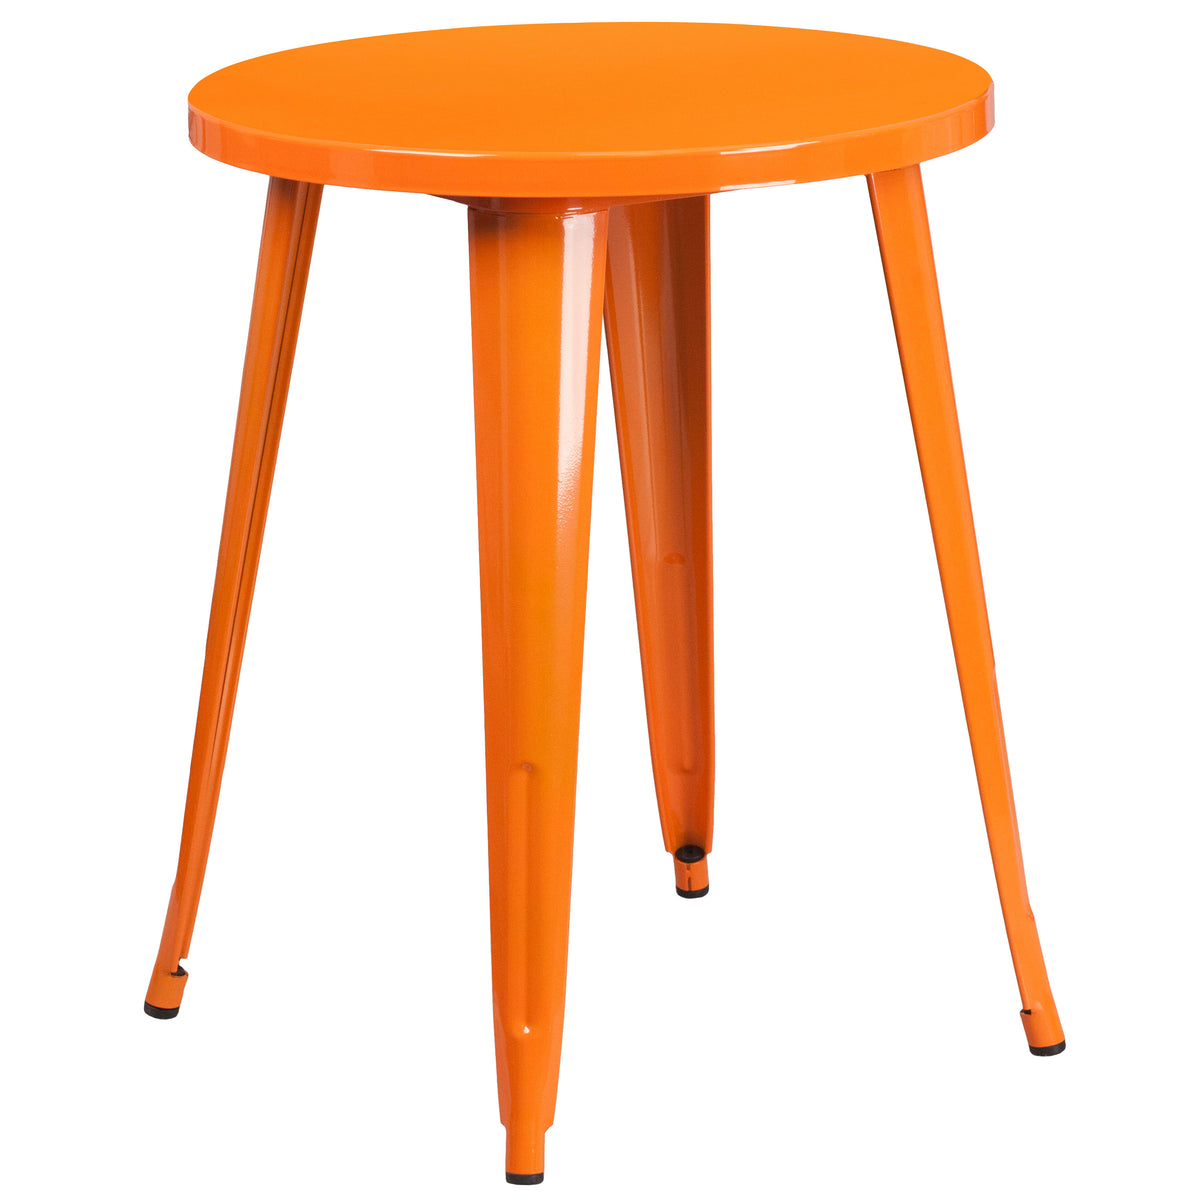 Orange |#| 24inch Round Orange Metal Indoor-Outdoor Table Set with 2 Cafe Chairs - Patio Set